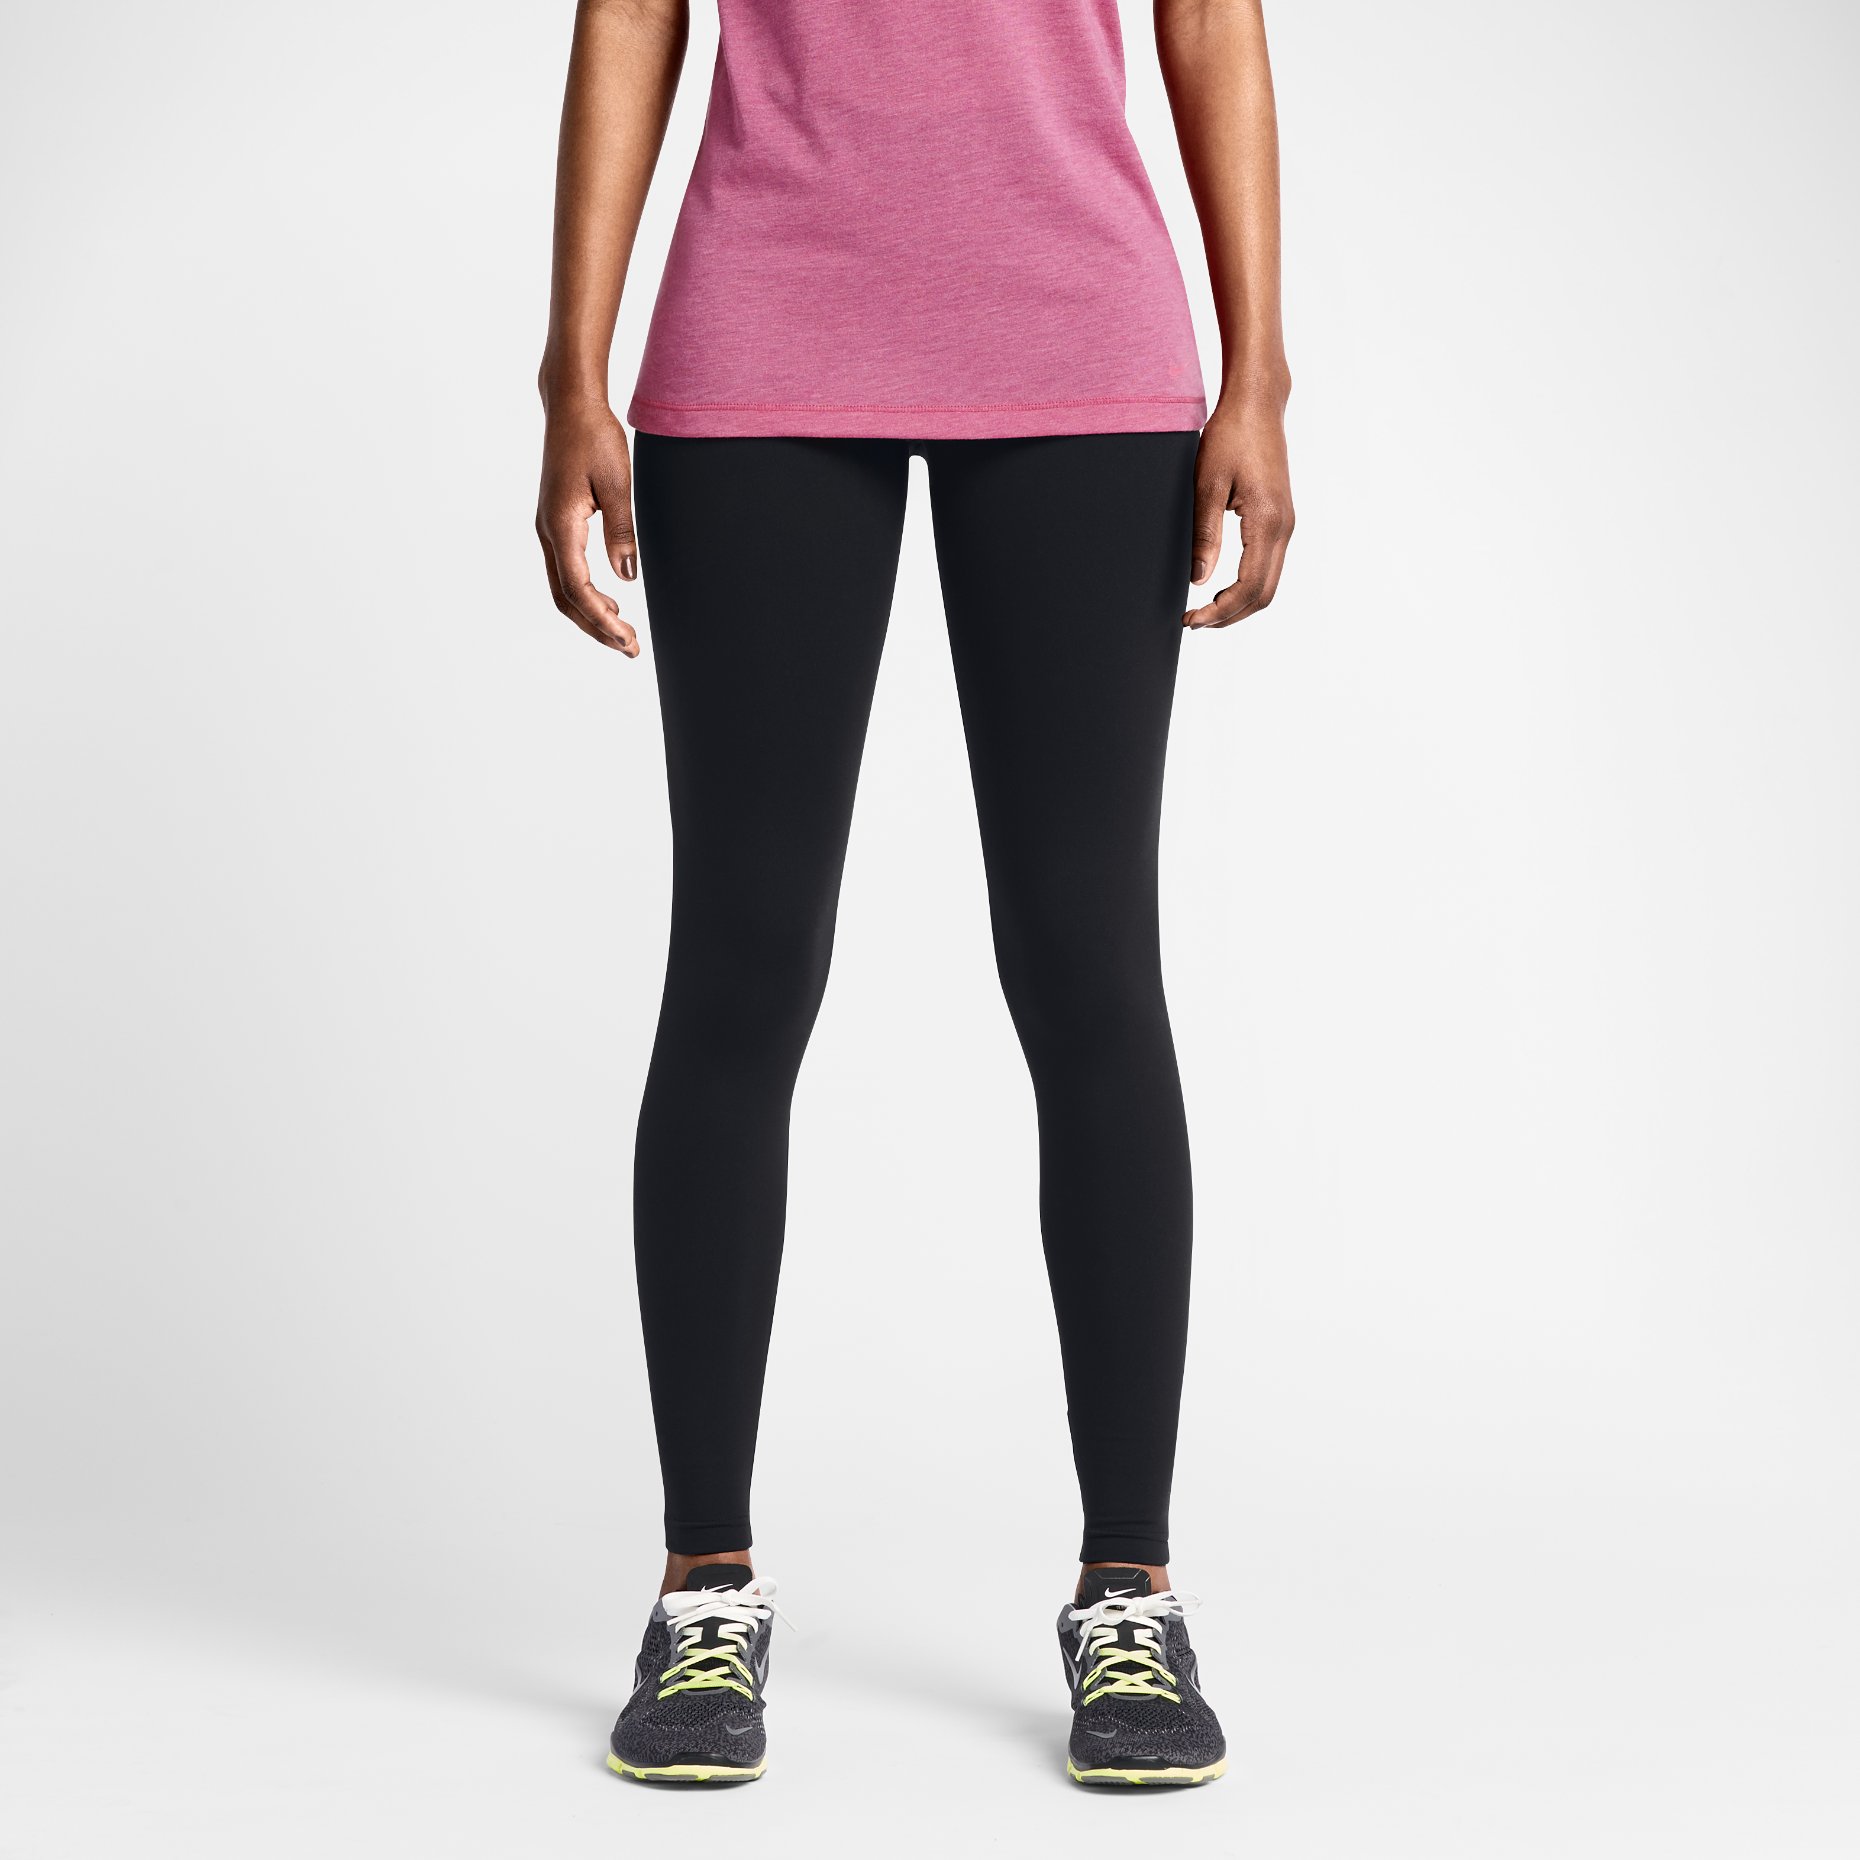 Nike legendary black running tights womens training